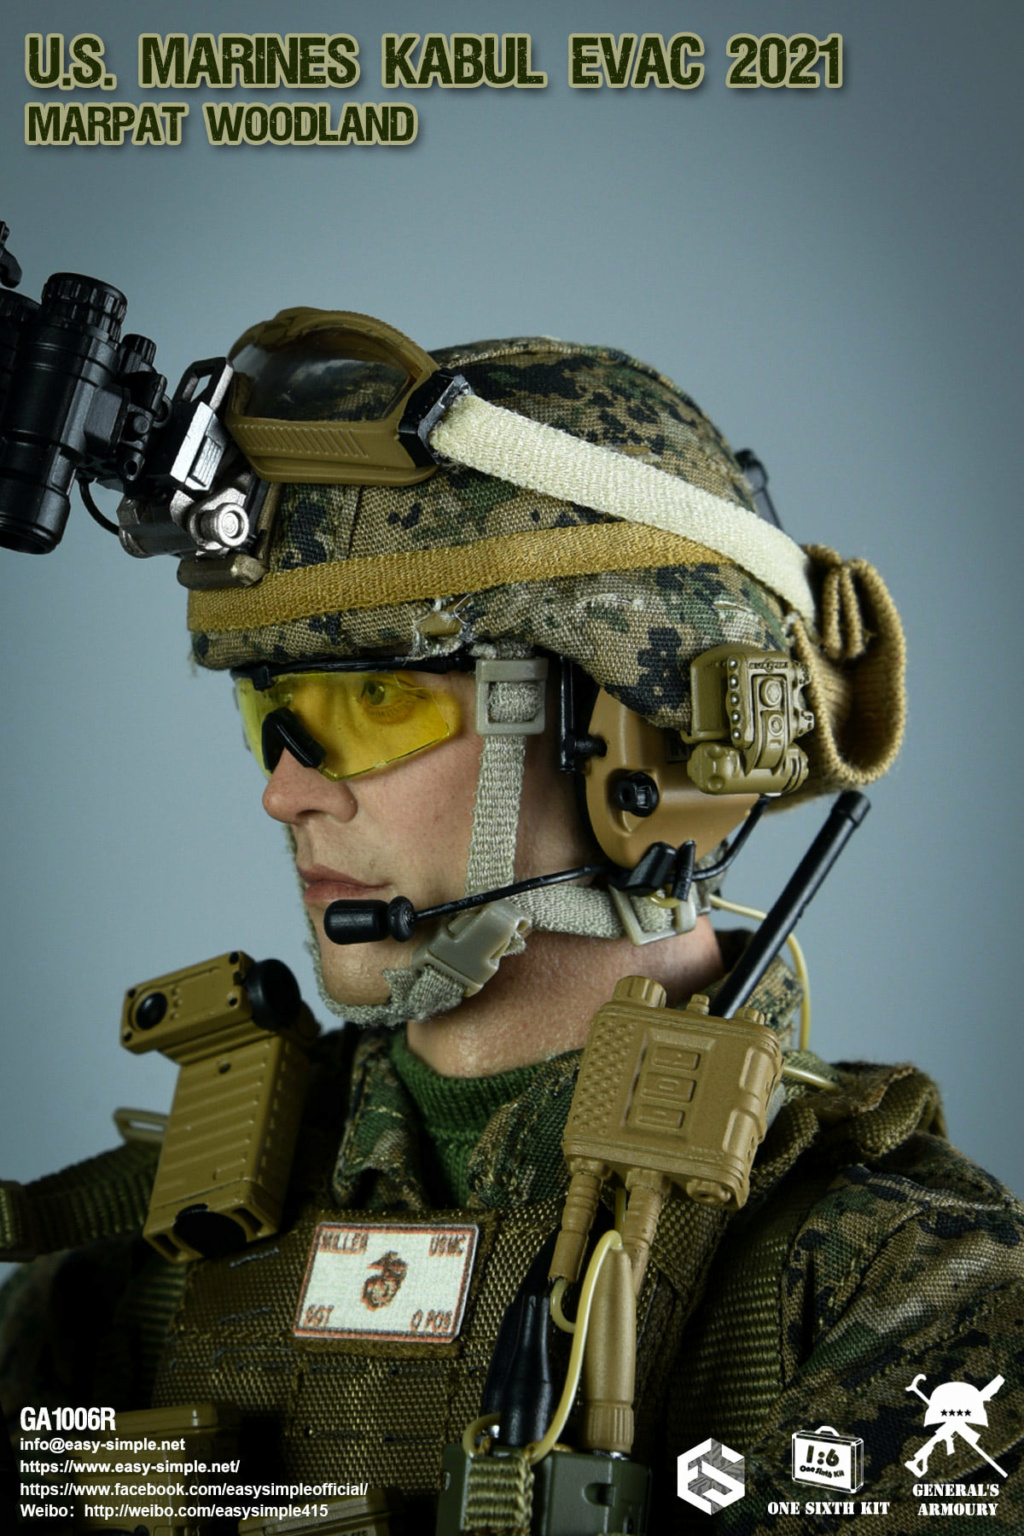 modernmilitary - NEW PRODUCT: General's Armoury: GA1006R U.S. MARINES KABUL EVAC 2021 MARPAT WOODLAND 27716510